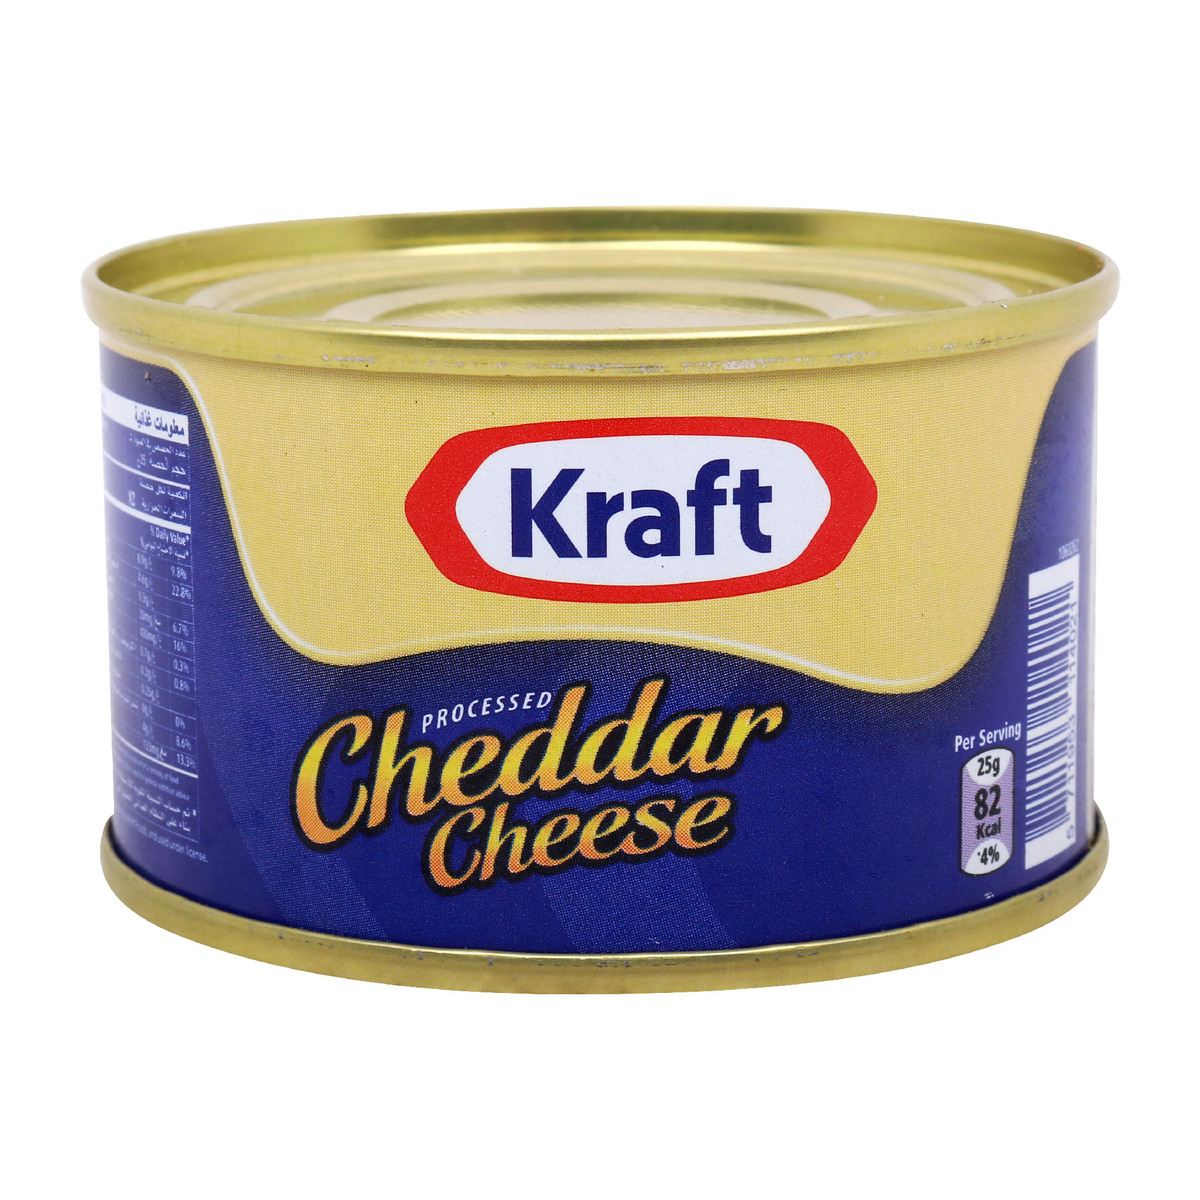 Kraft Processed Cheddar Cheese 113 g